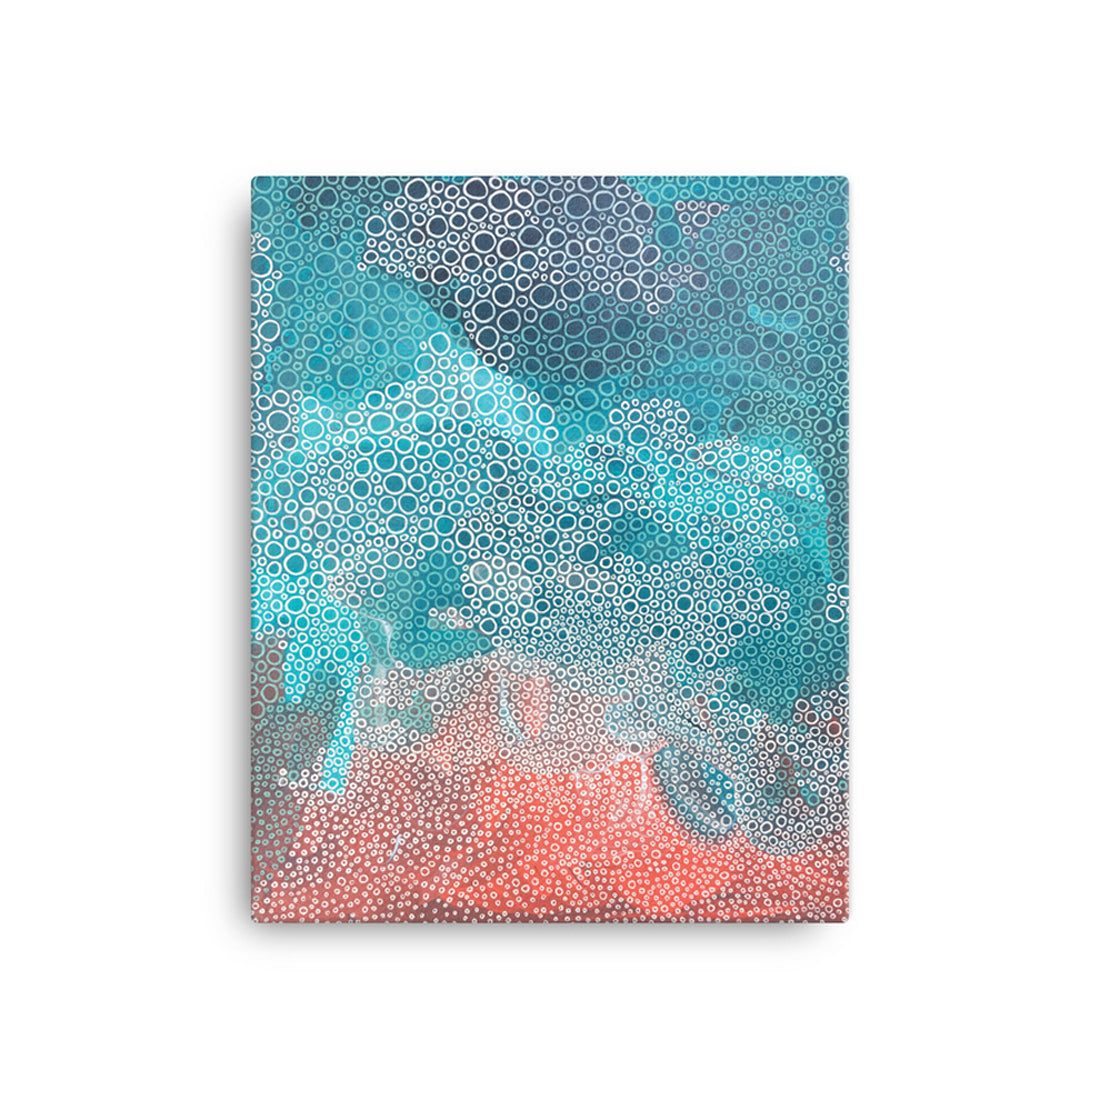 Sea Foam limited edition print